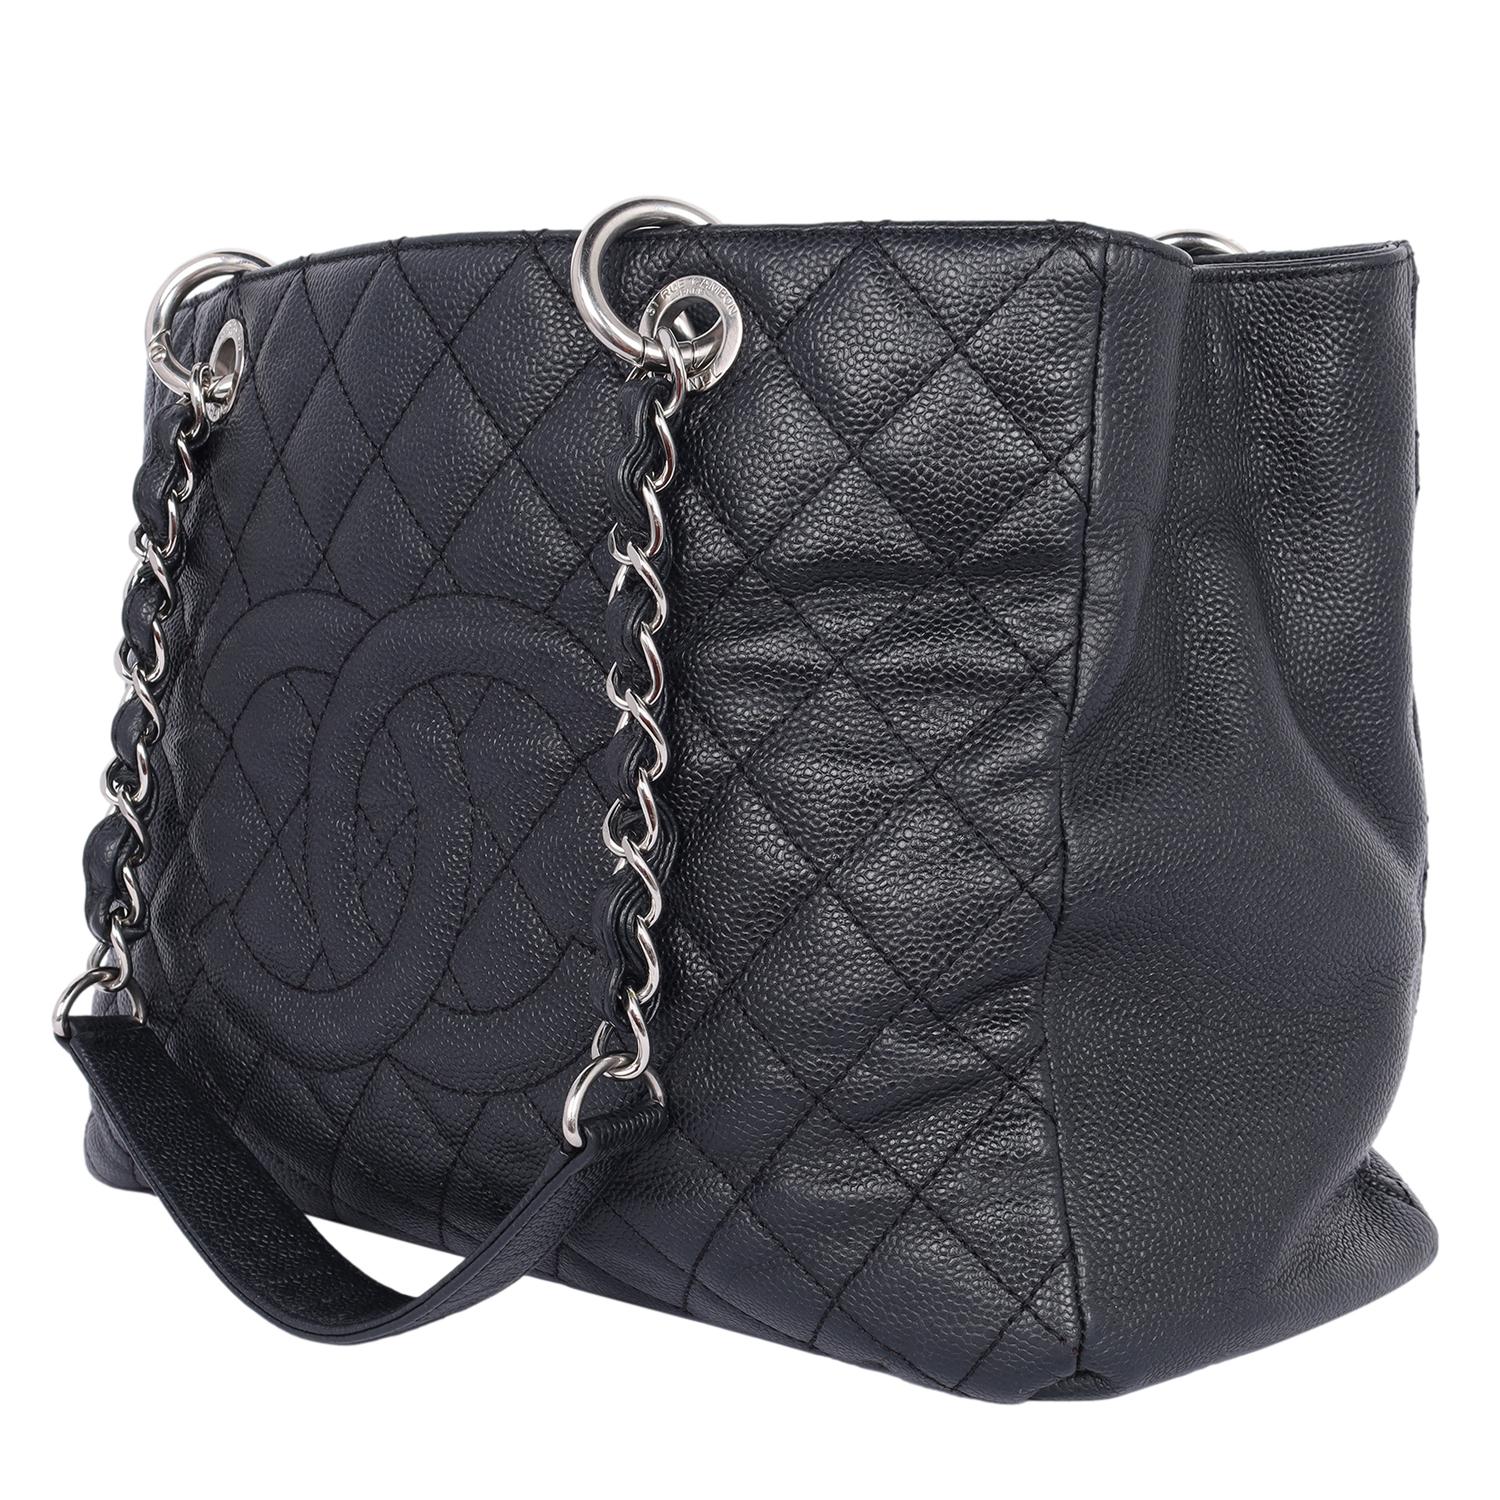 Chanel Caviar Leather Grand Shopping Tote Black 1